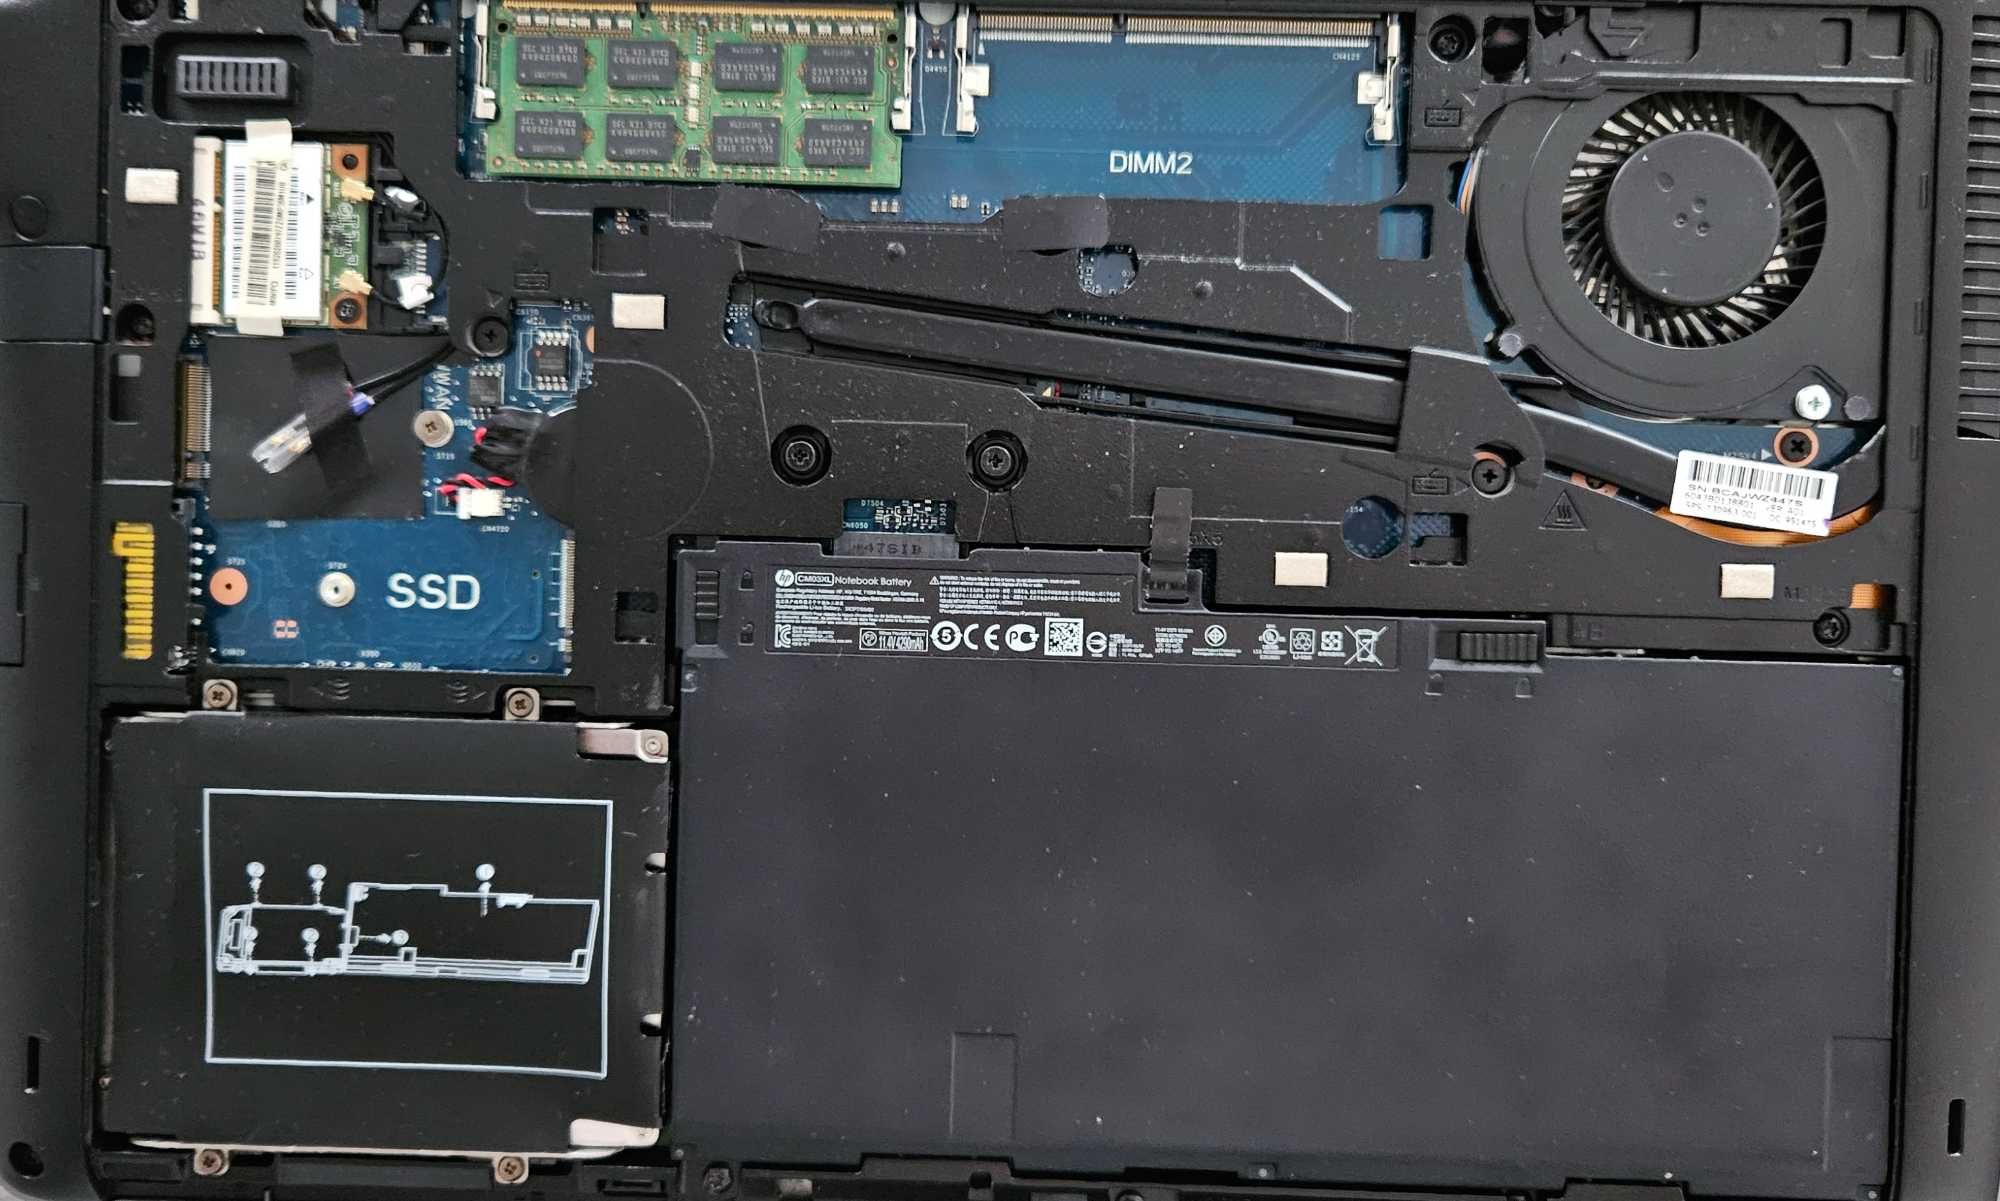 Laptop HP EliteBook 840 i5 8Gb RAM